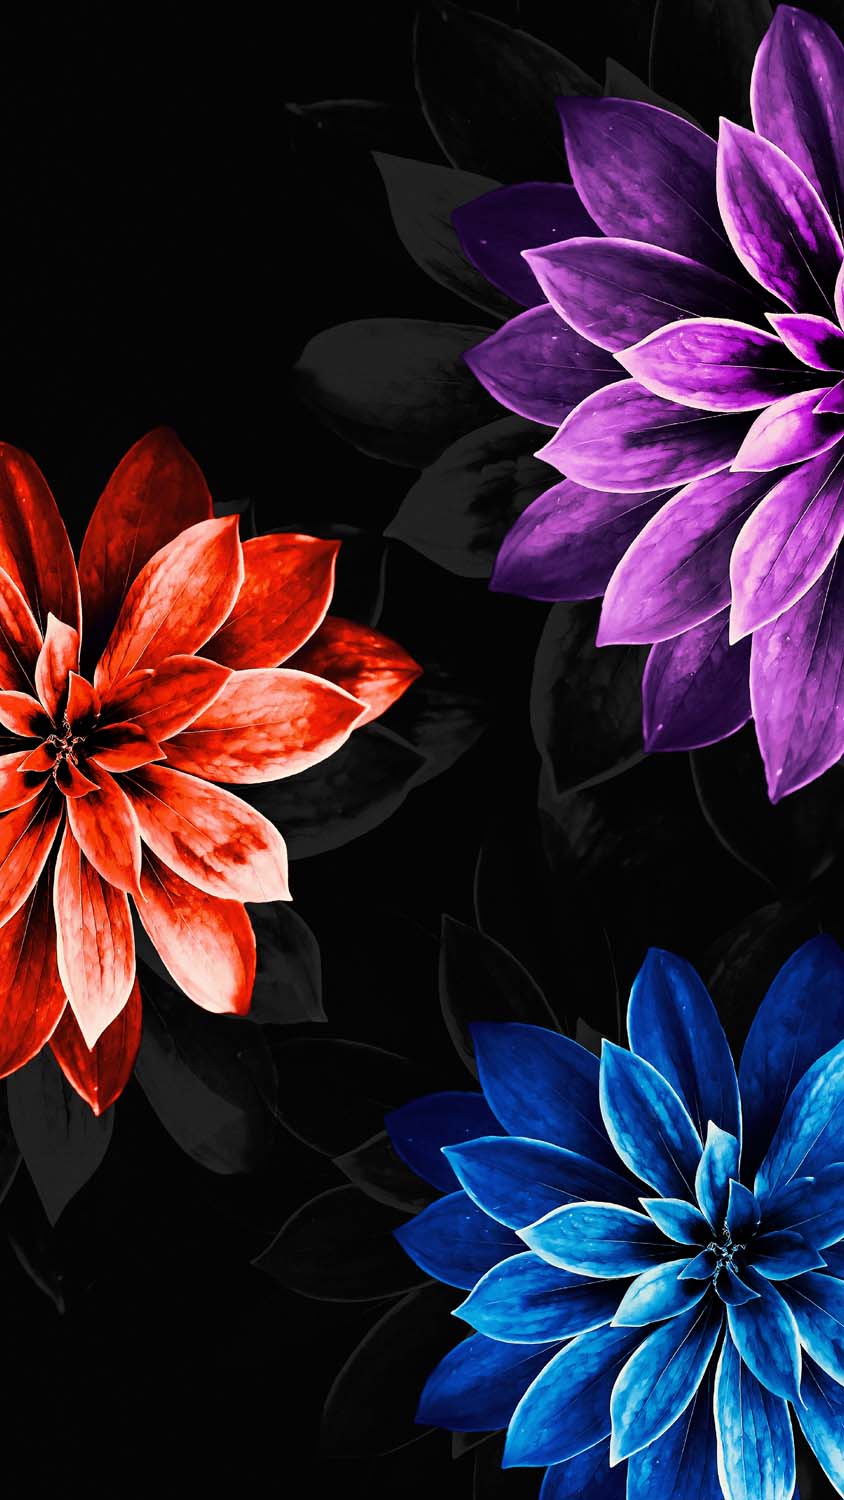 Flowers Amoled IPhone Wallpaper HD - IPhone Wallpapers : iPhone Wallpapers